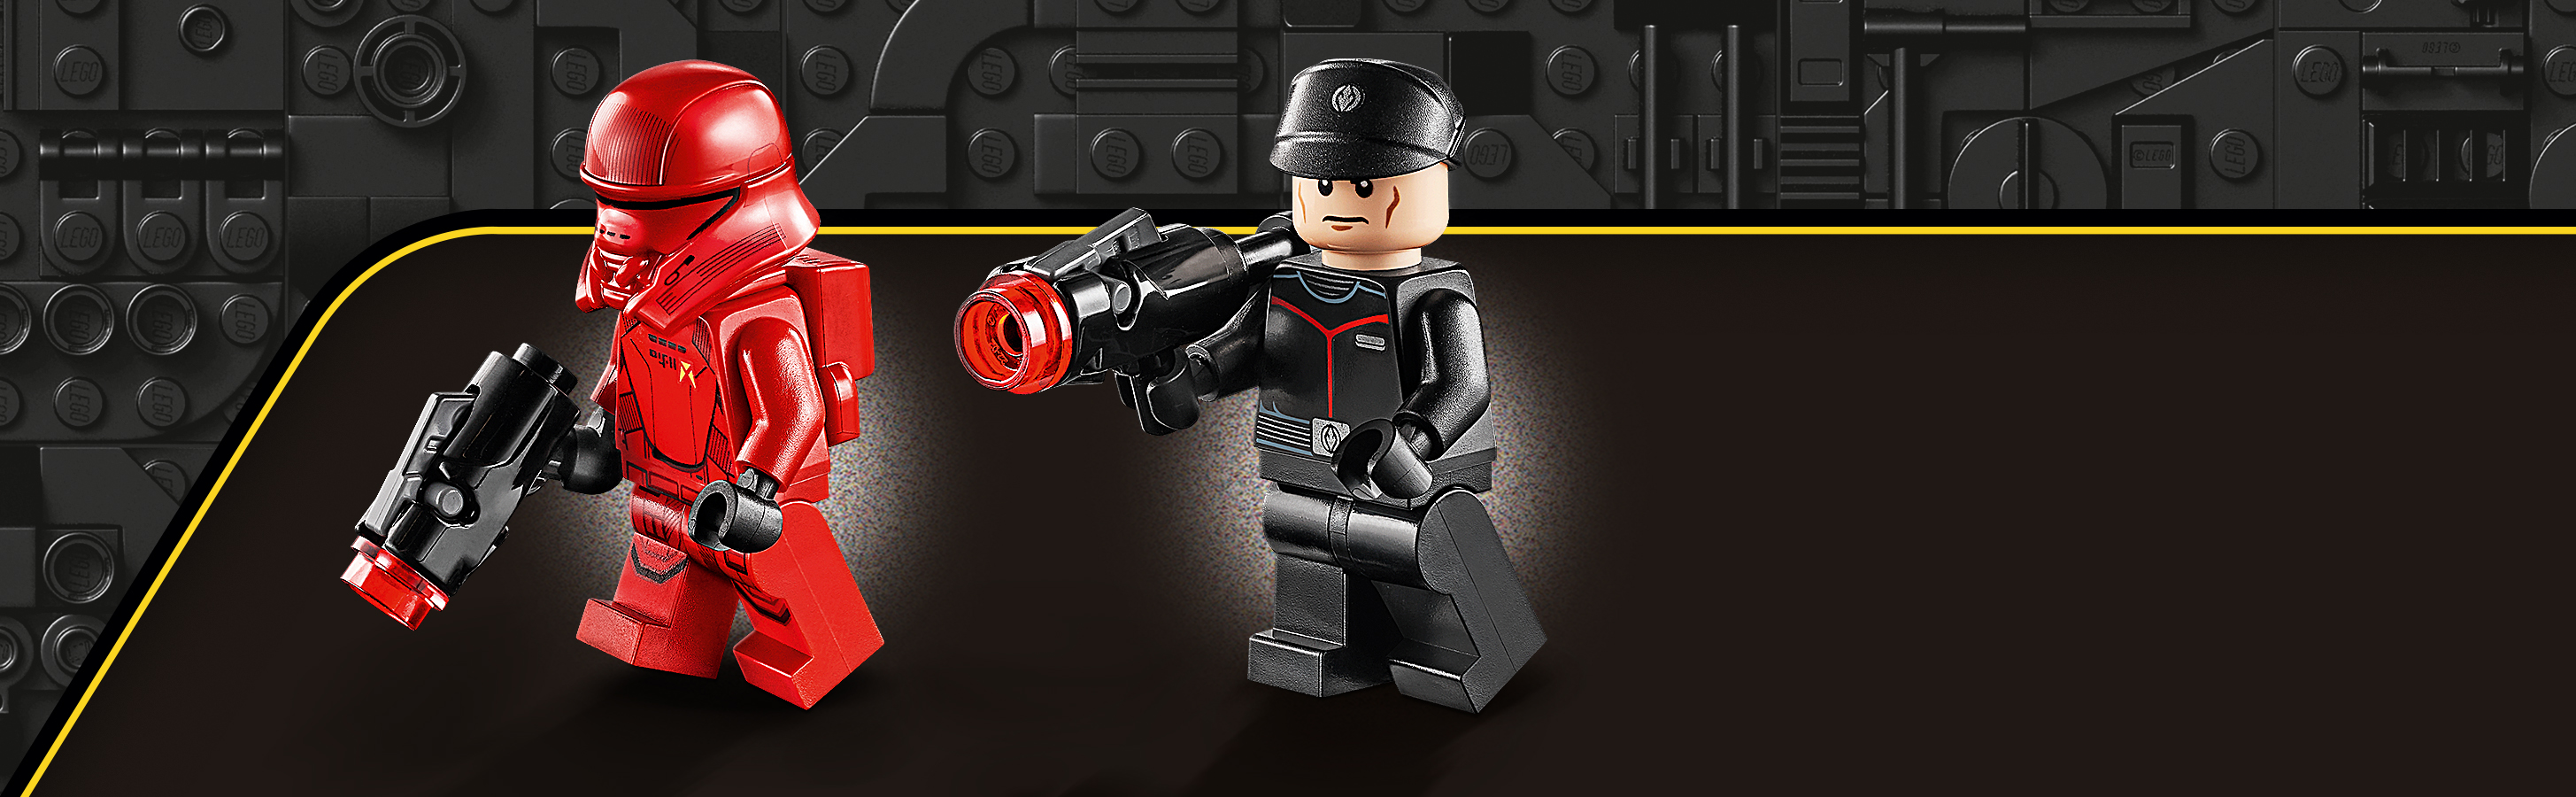 Sada obsahuje 4 minifigurky LEGO® Star Wars™